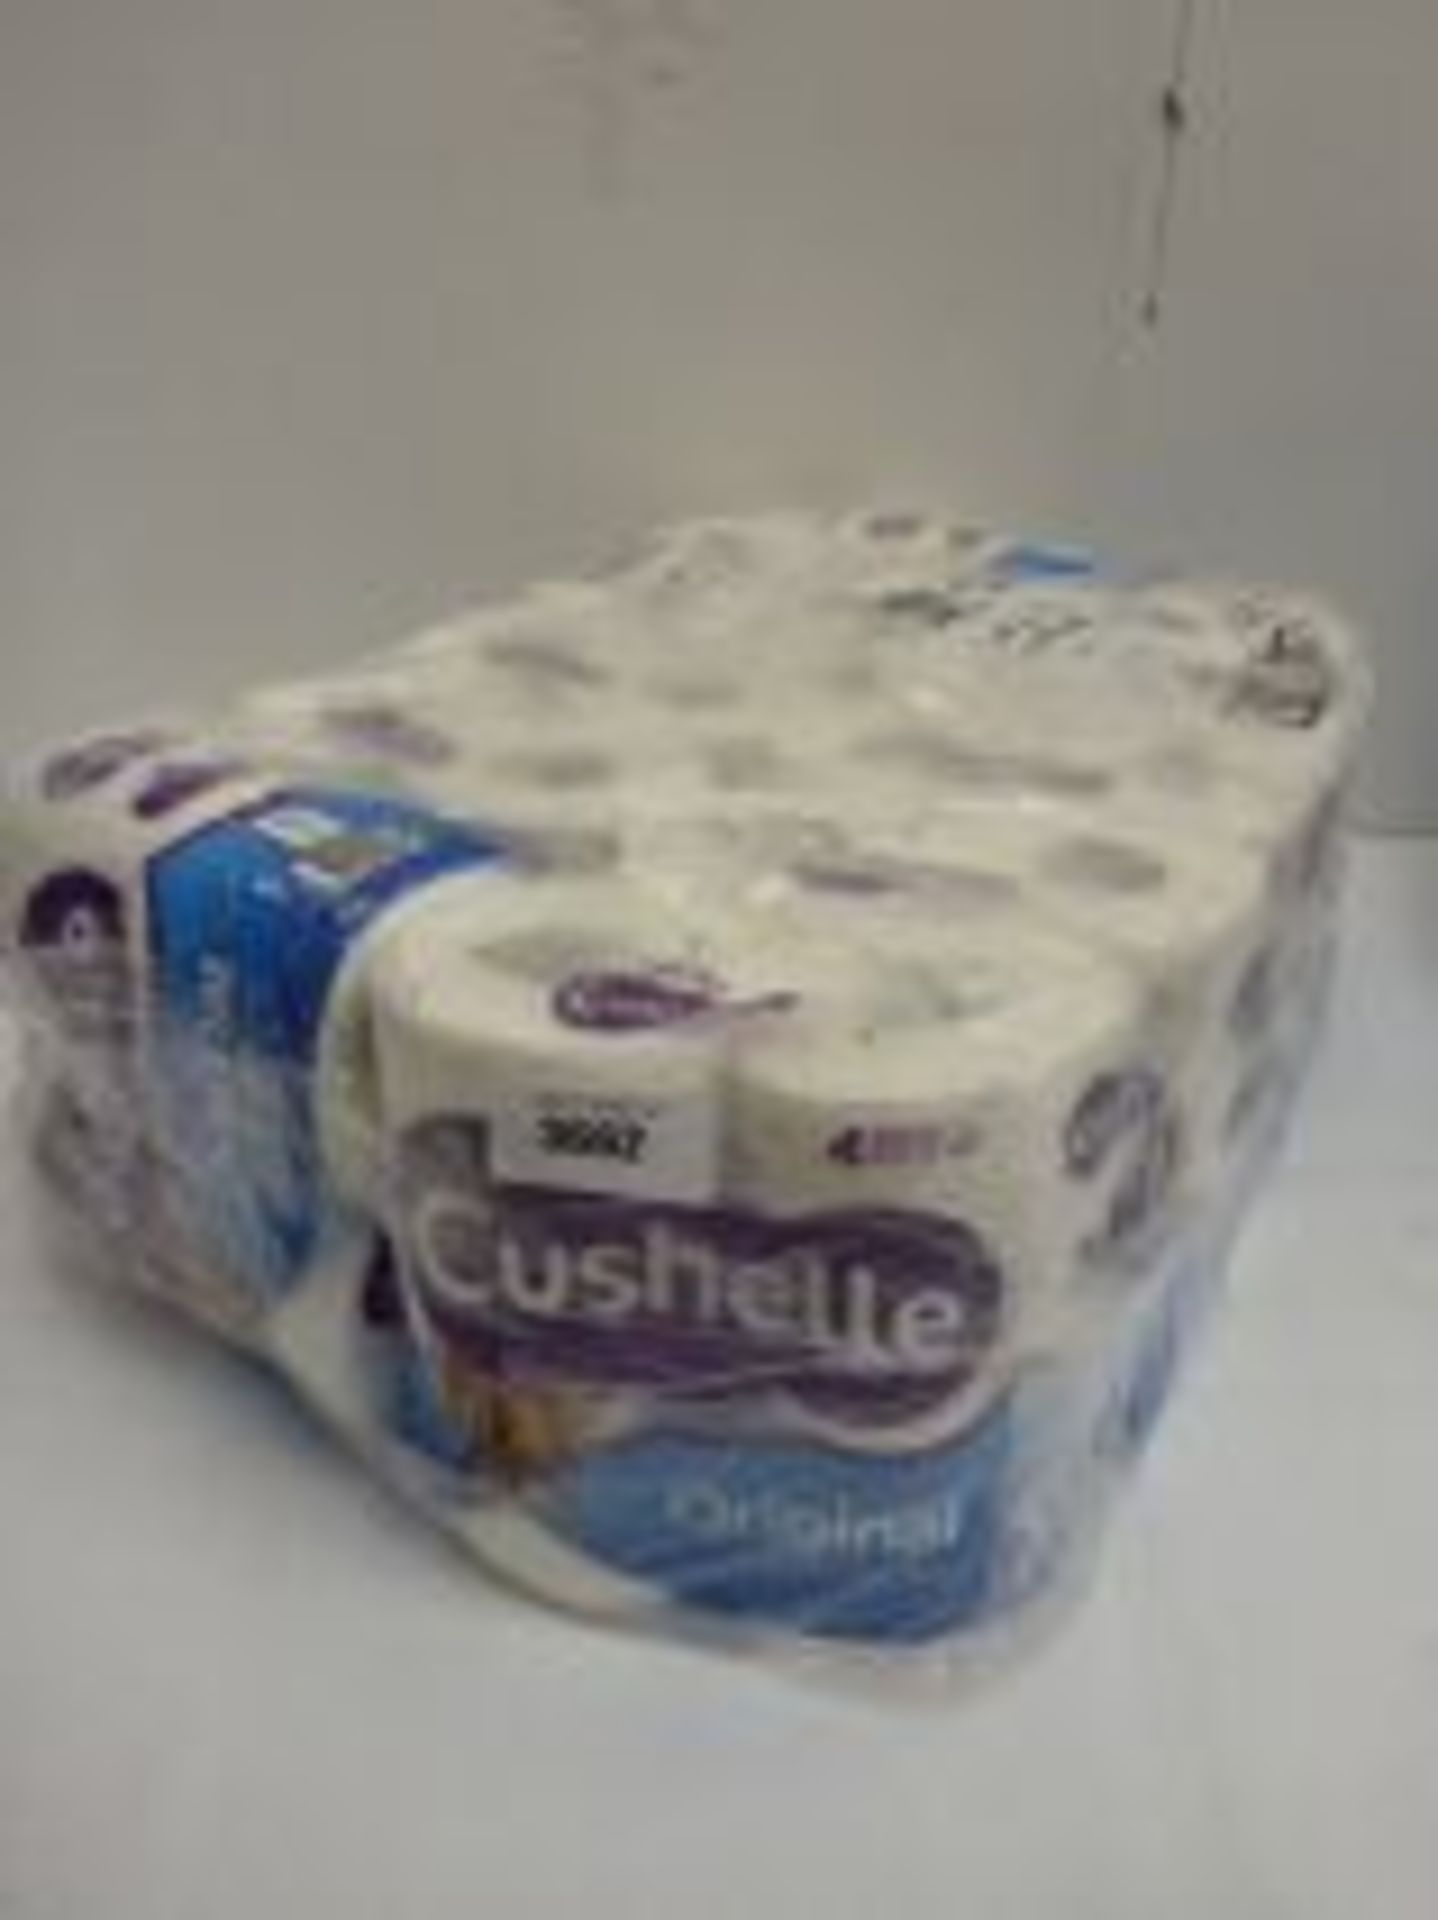 11 x 4 roll packs of Cushell original soft toilet tissue